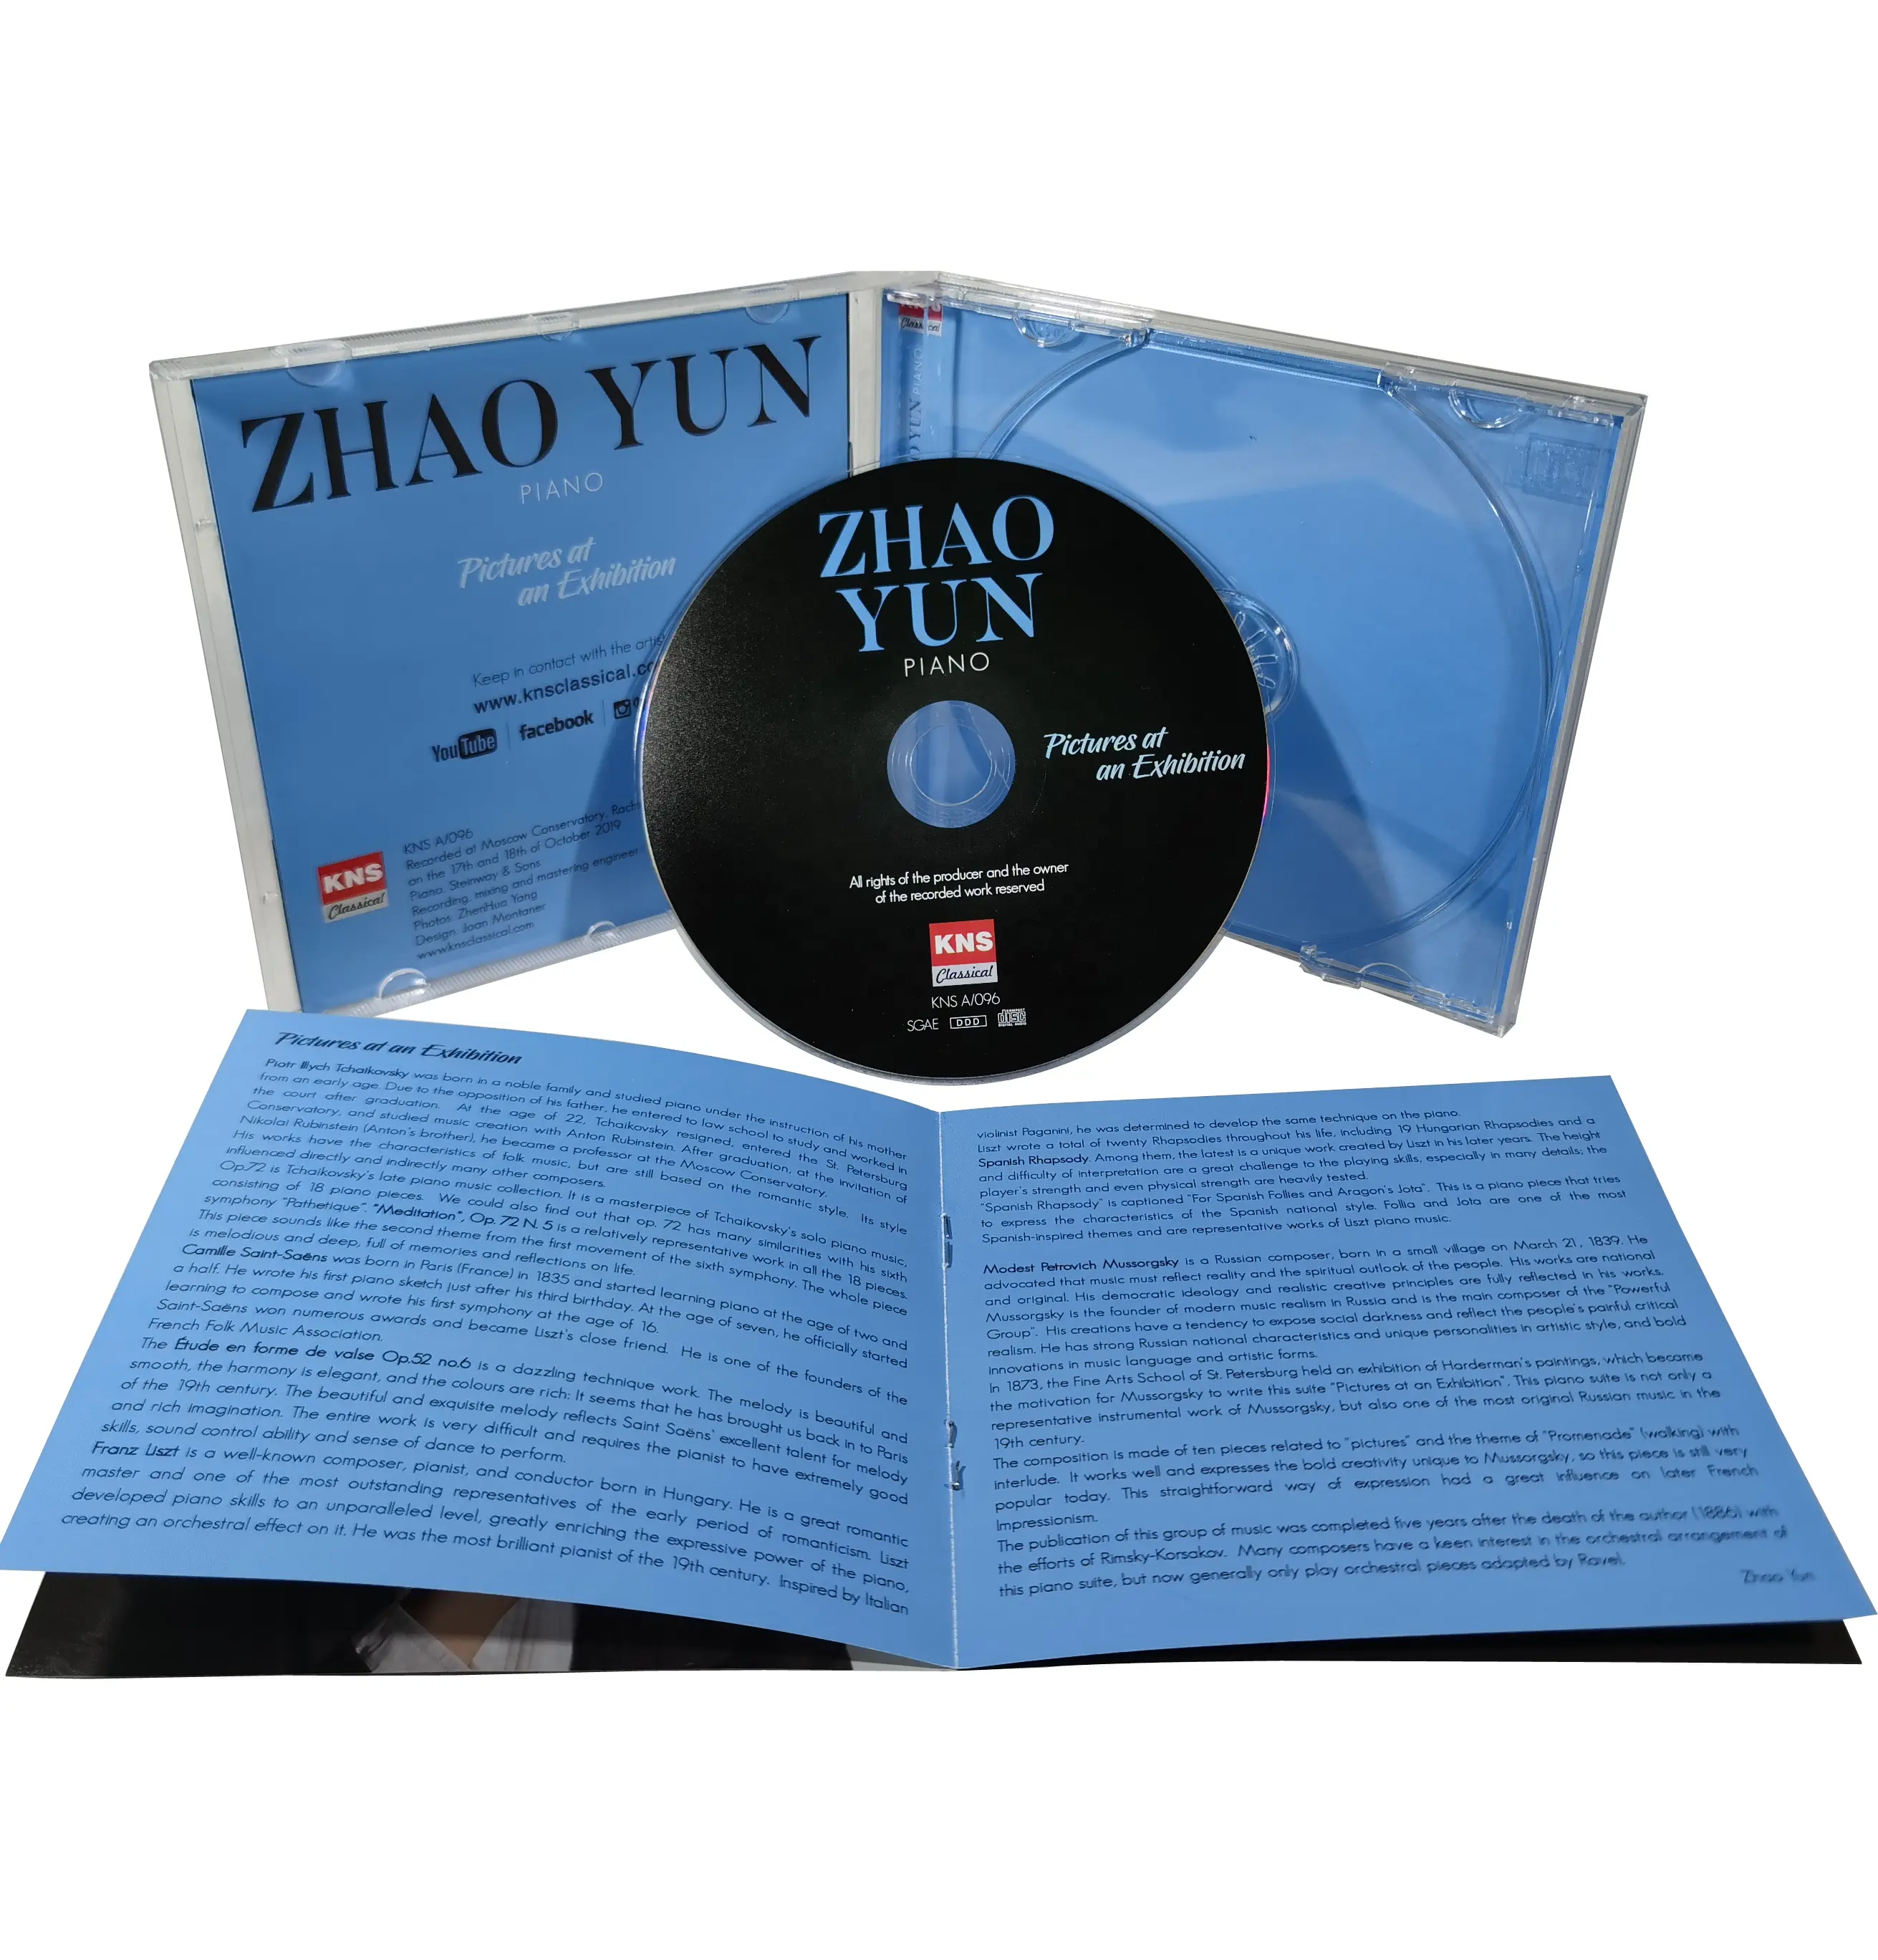 Jewel Case Album CD Pressing CD Music record DVD CD Replication Duplication with custom Booklet